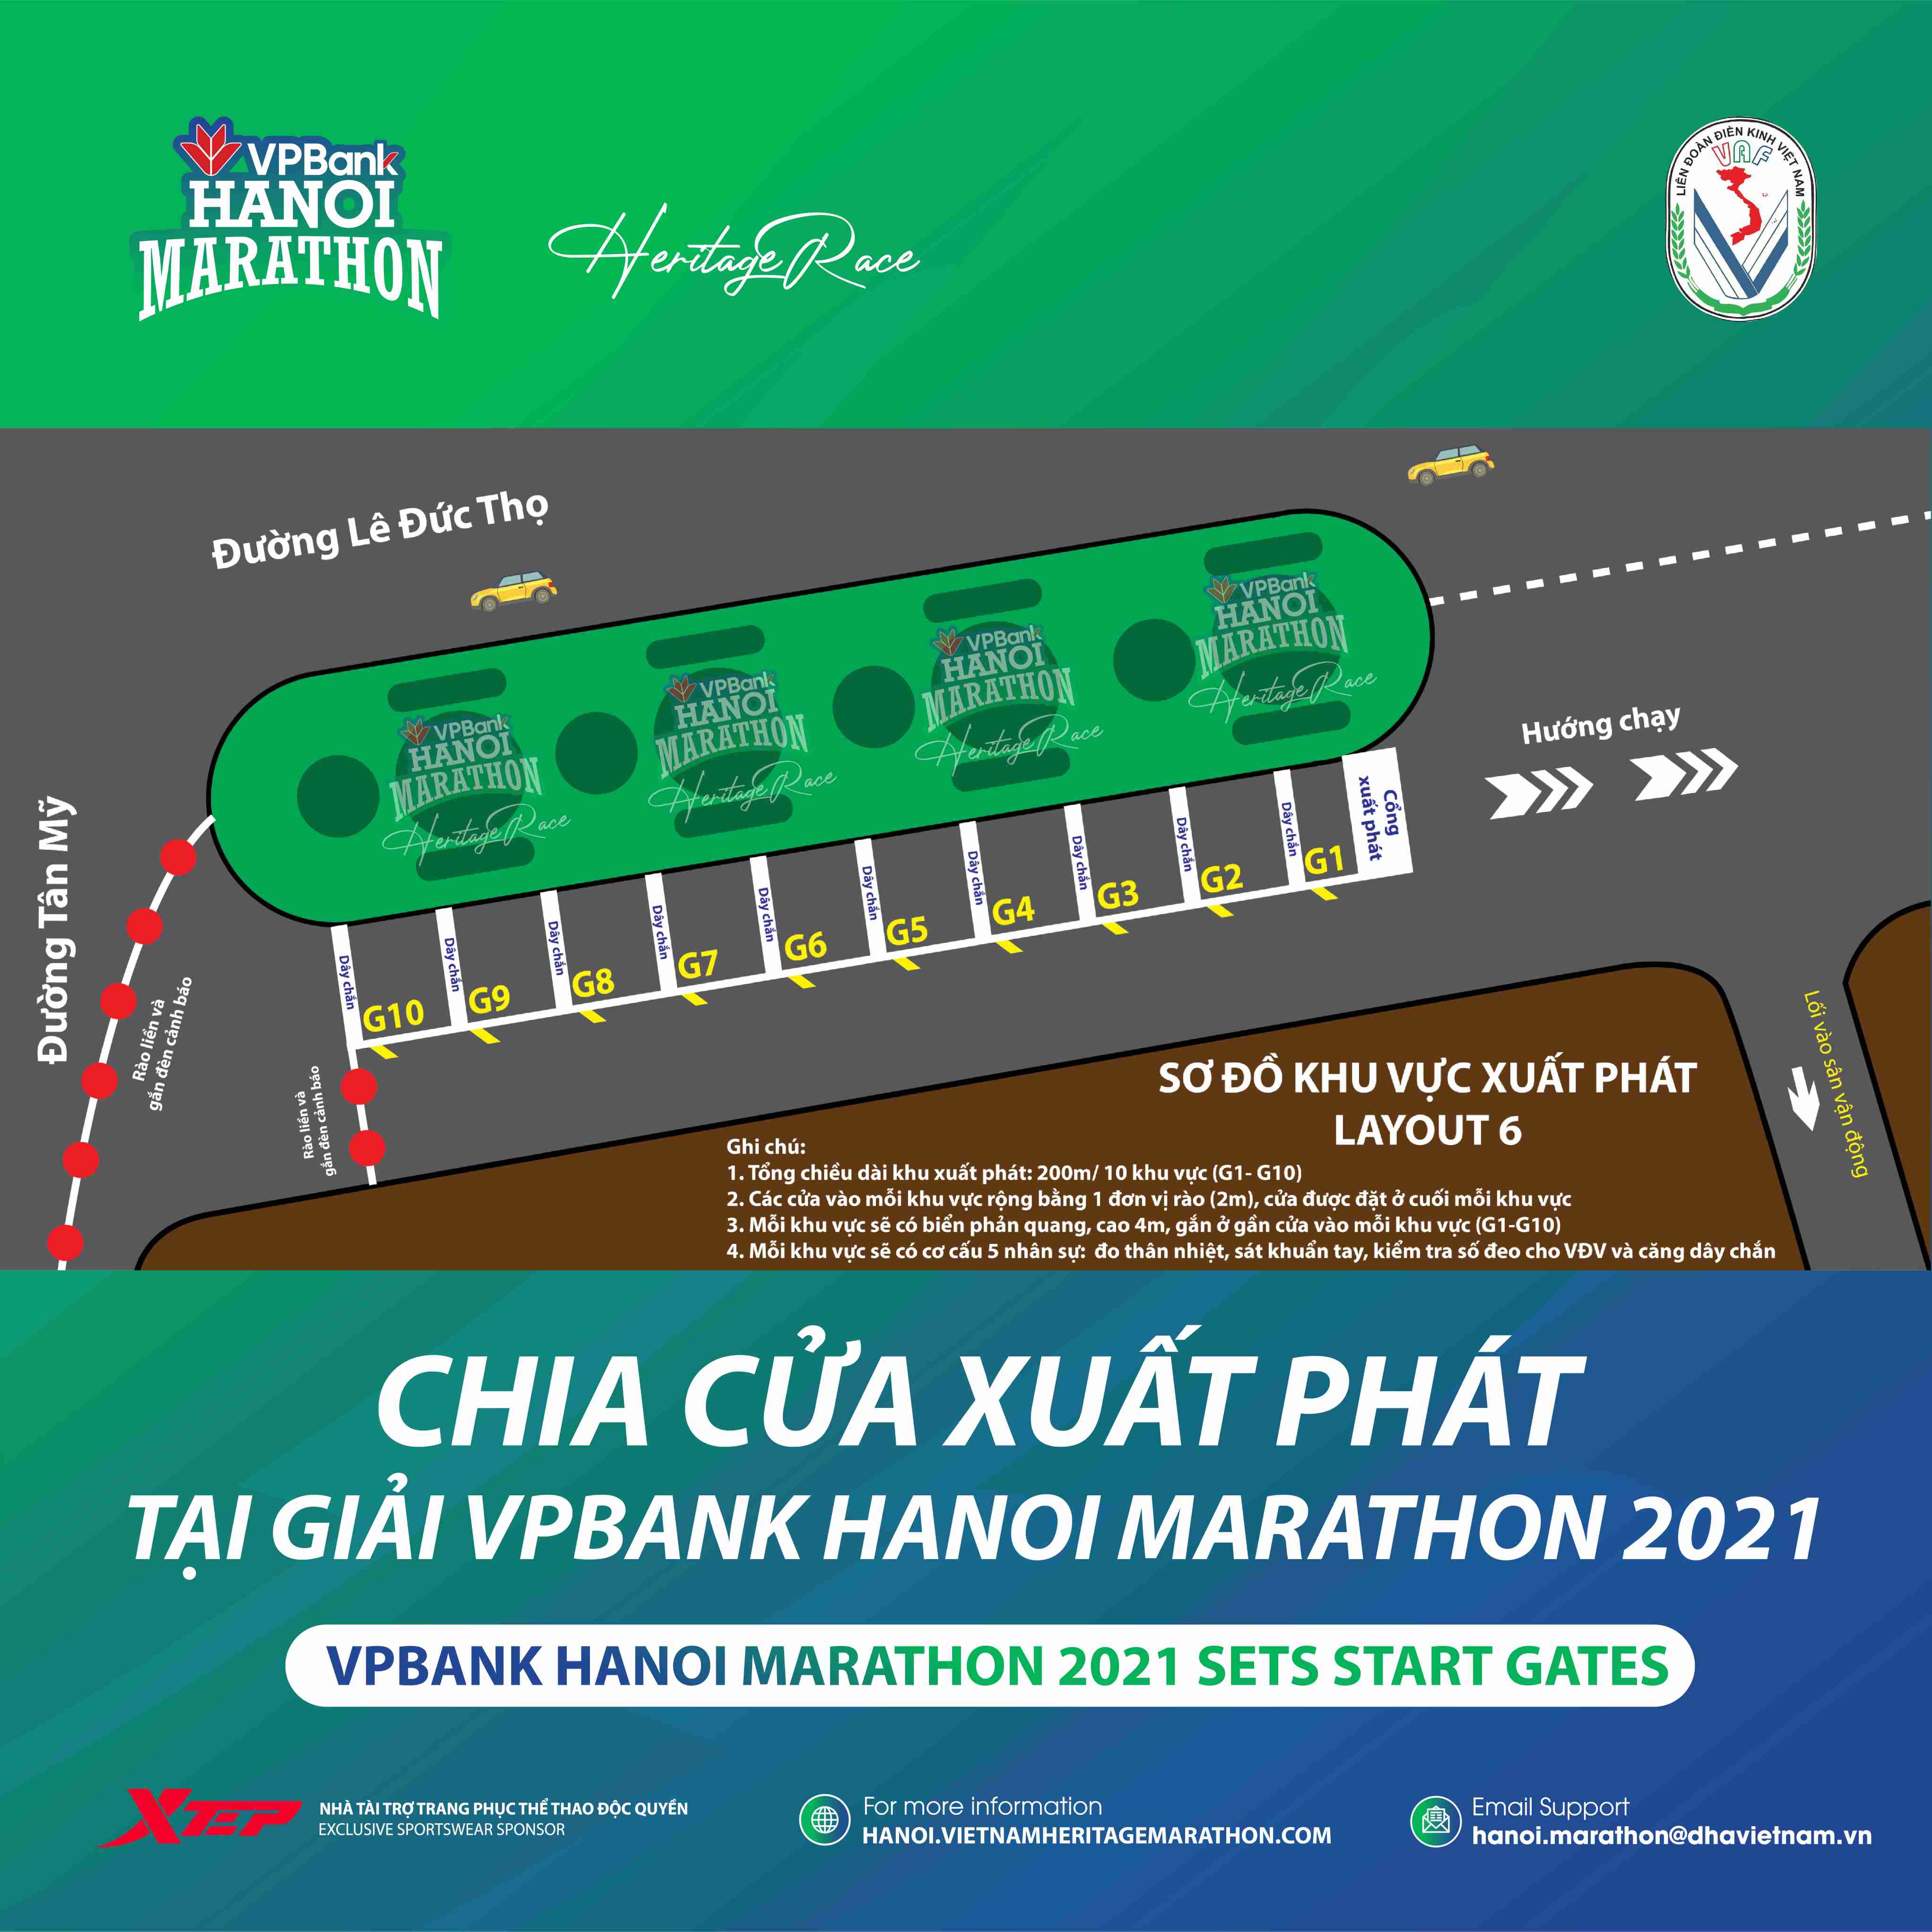 VPBank Hanoi Marathon 2021 To Set Start Gates To Limit Infections